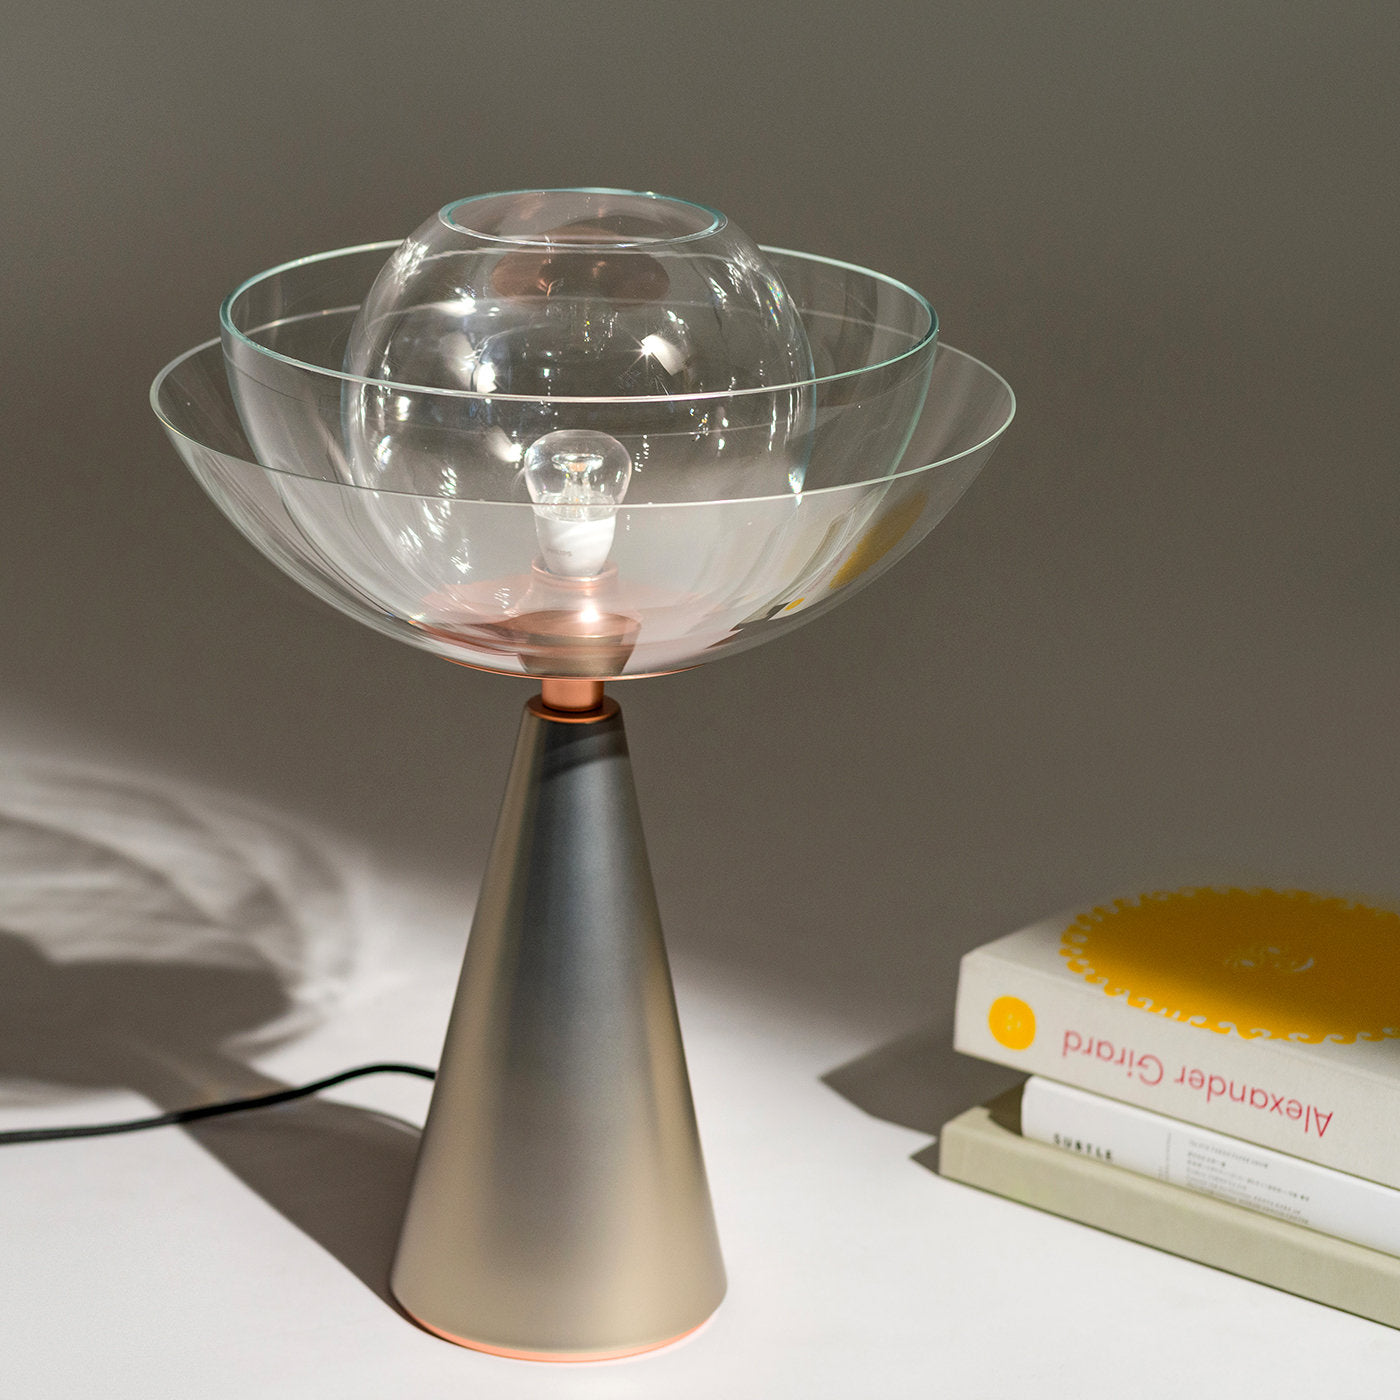 Lotus nickel table lamp - Alternative view 2